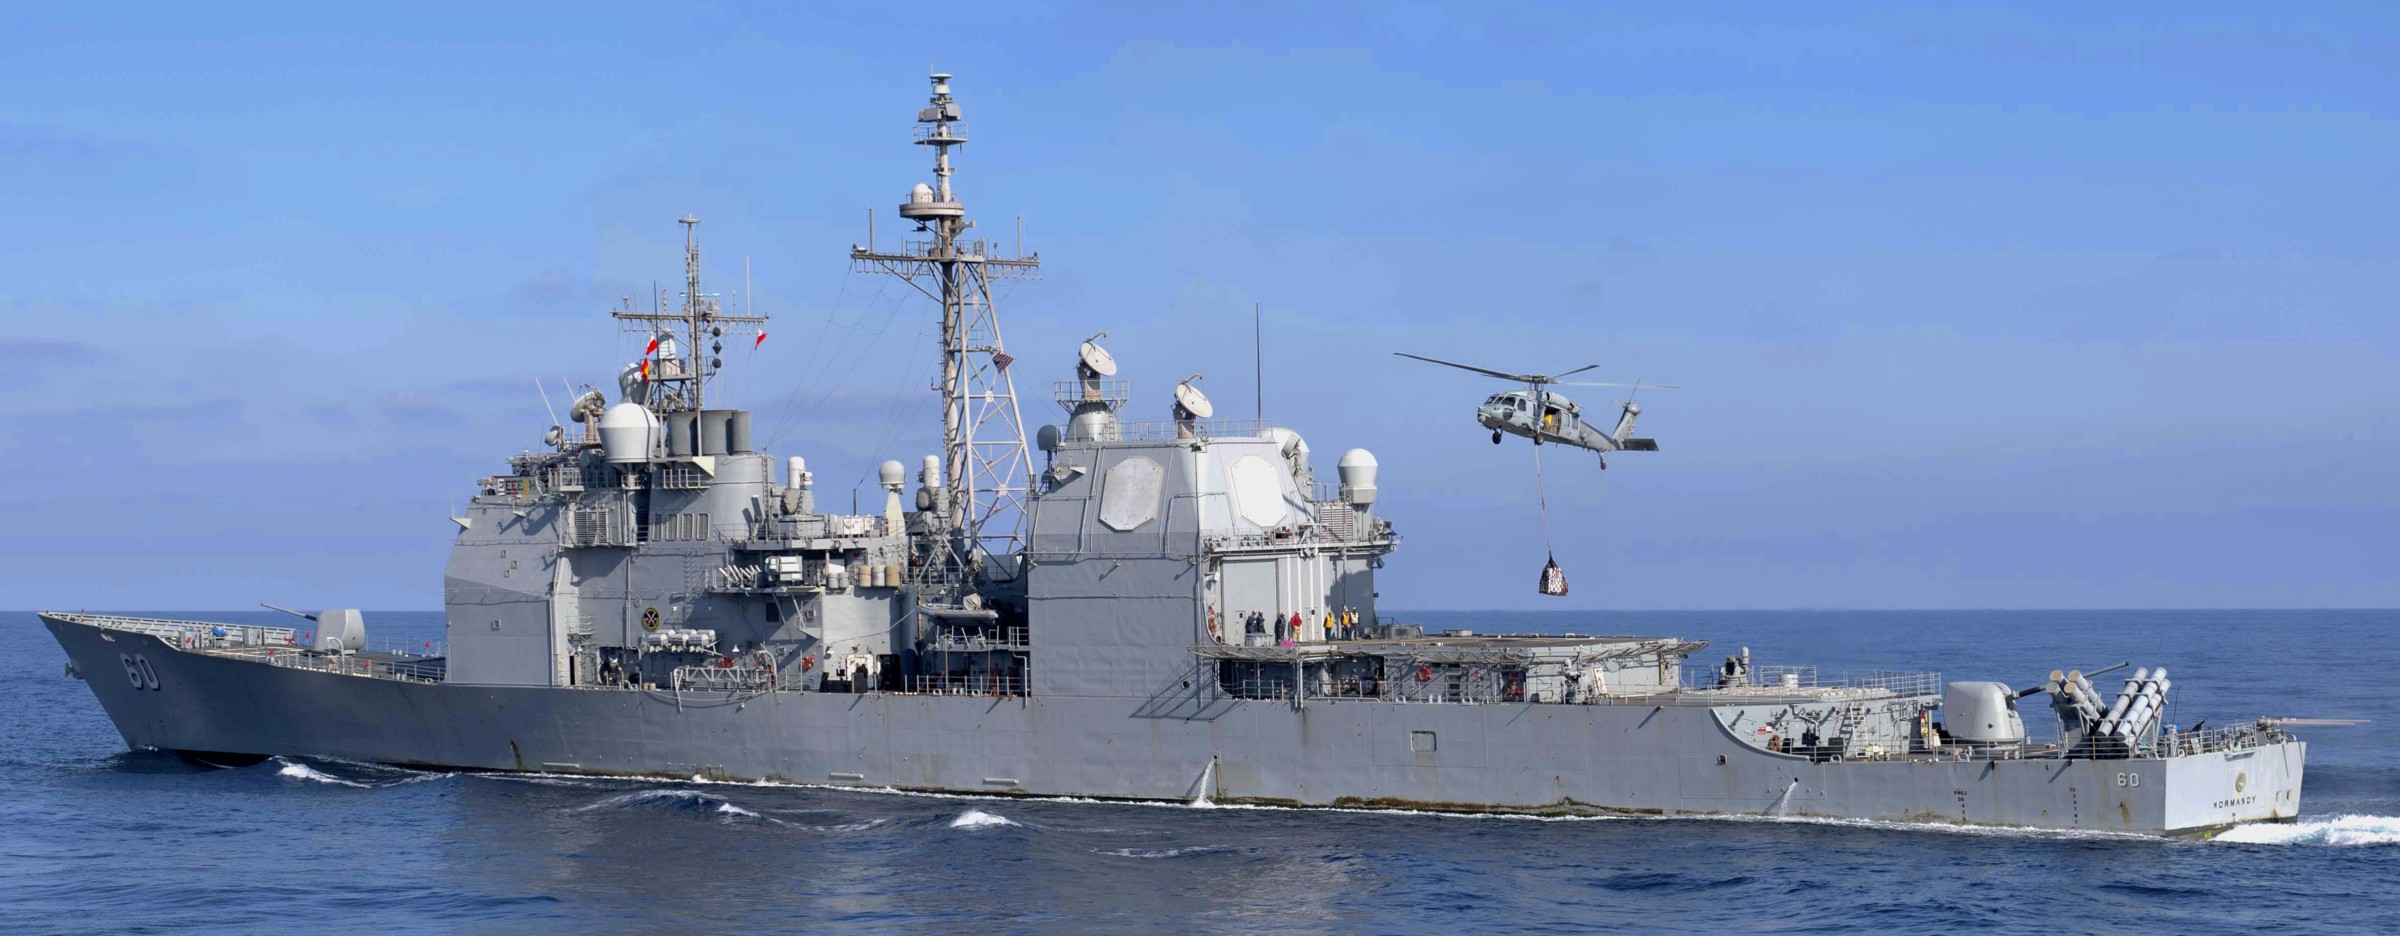 cg-60 uss normandy ticonderoga class guided missile cruiser aegis us navy 96